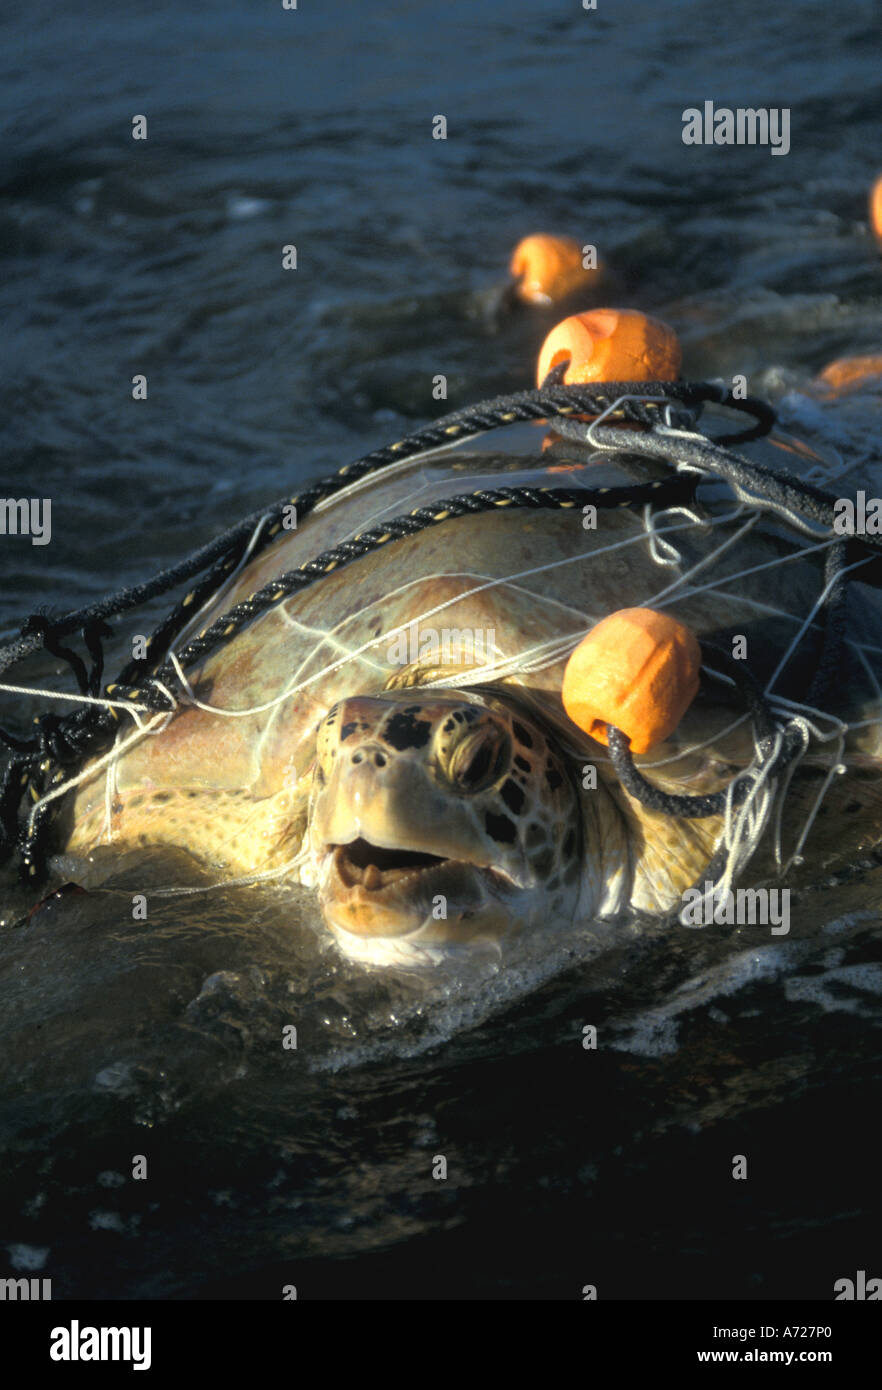 Unechte Meeresschildkröte gefangen Fischen net Caretta Caretta bedrohte Arten Stockfoto